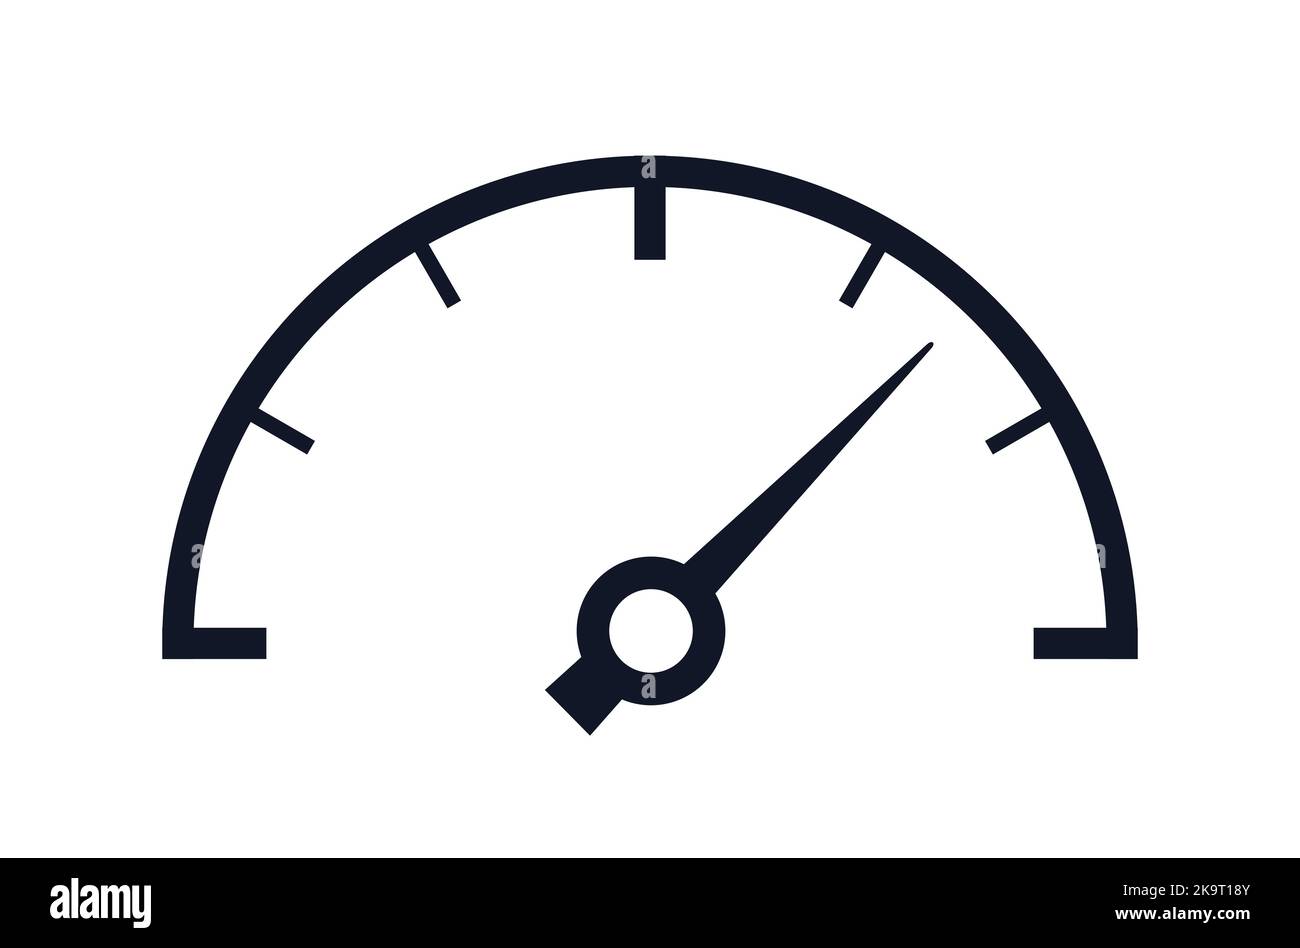 Speed symbol performance tacho icon Stock Vector